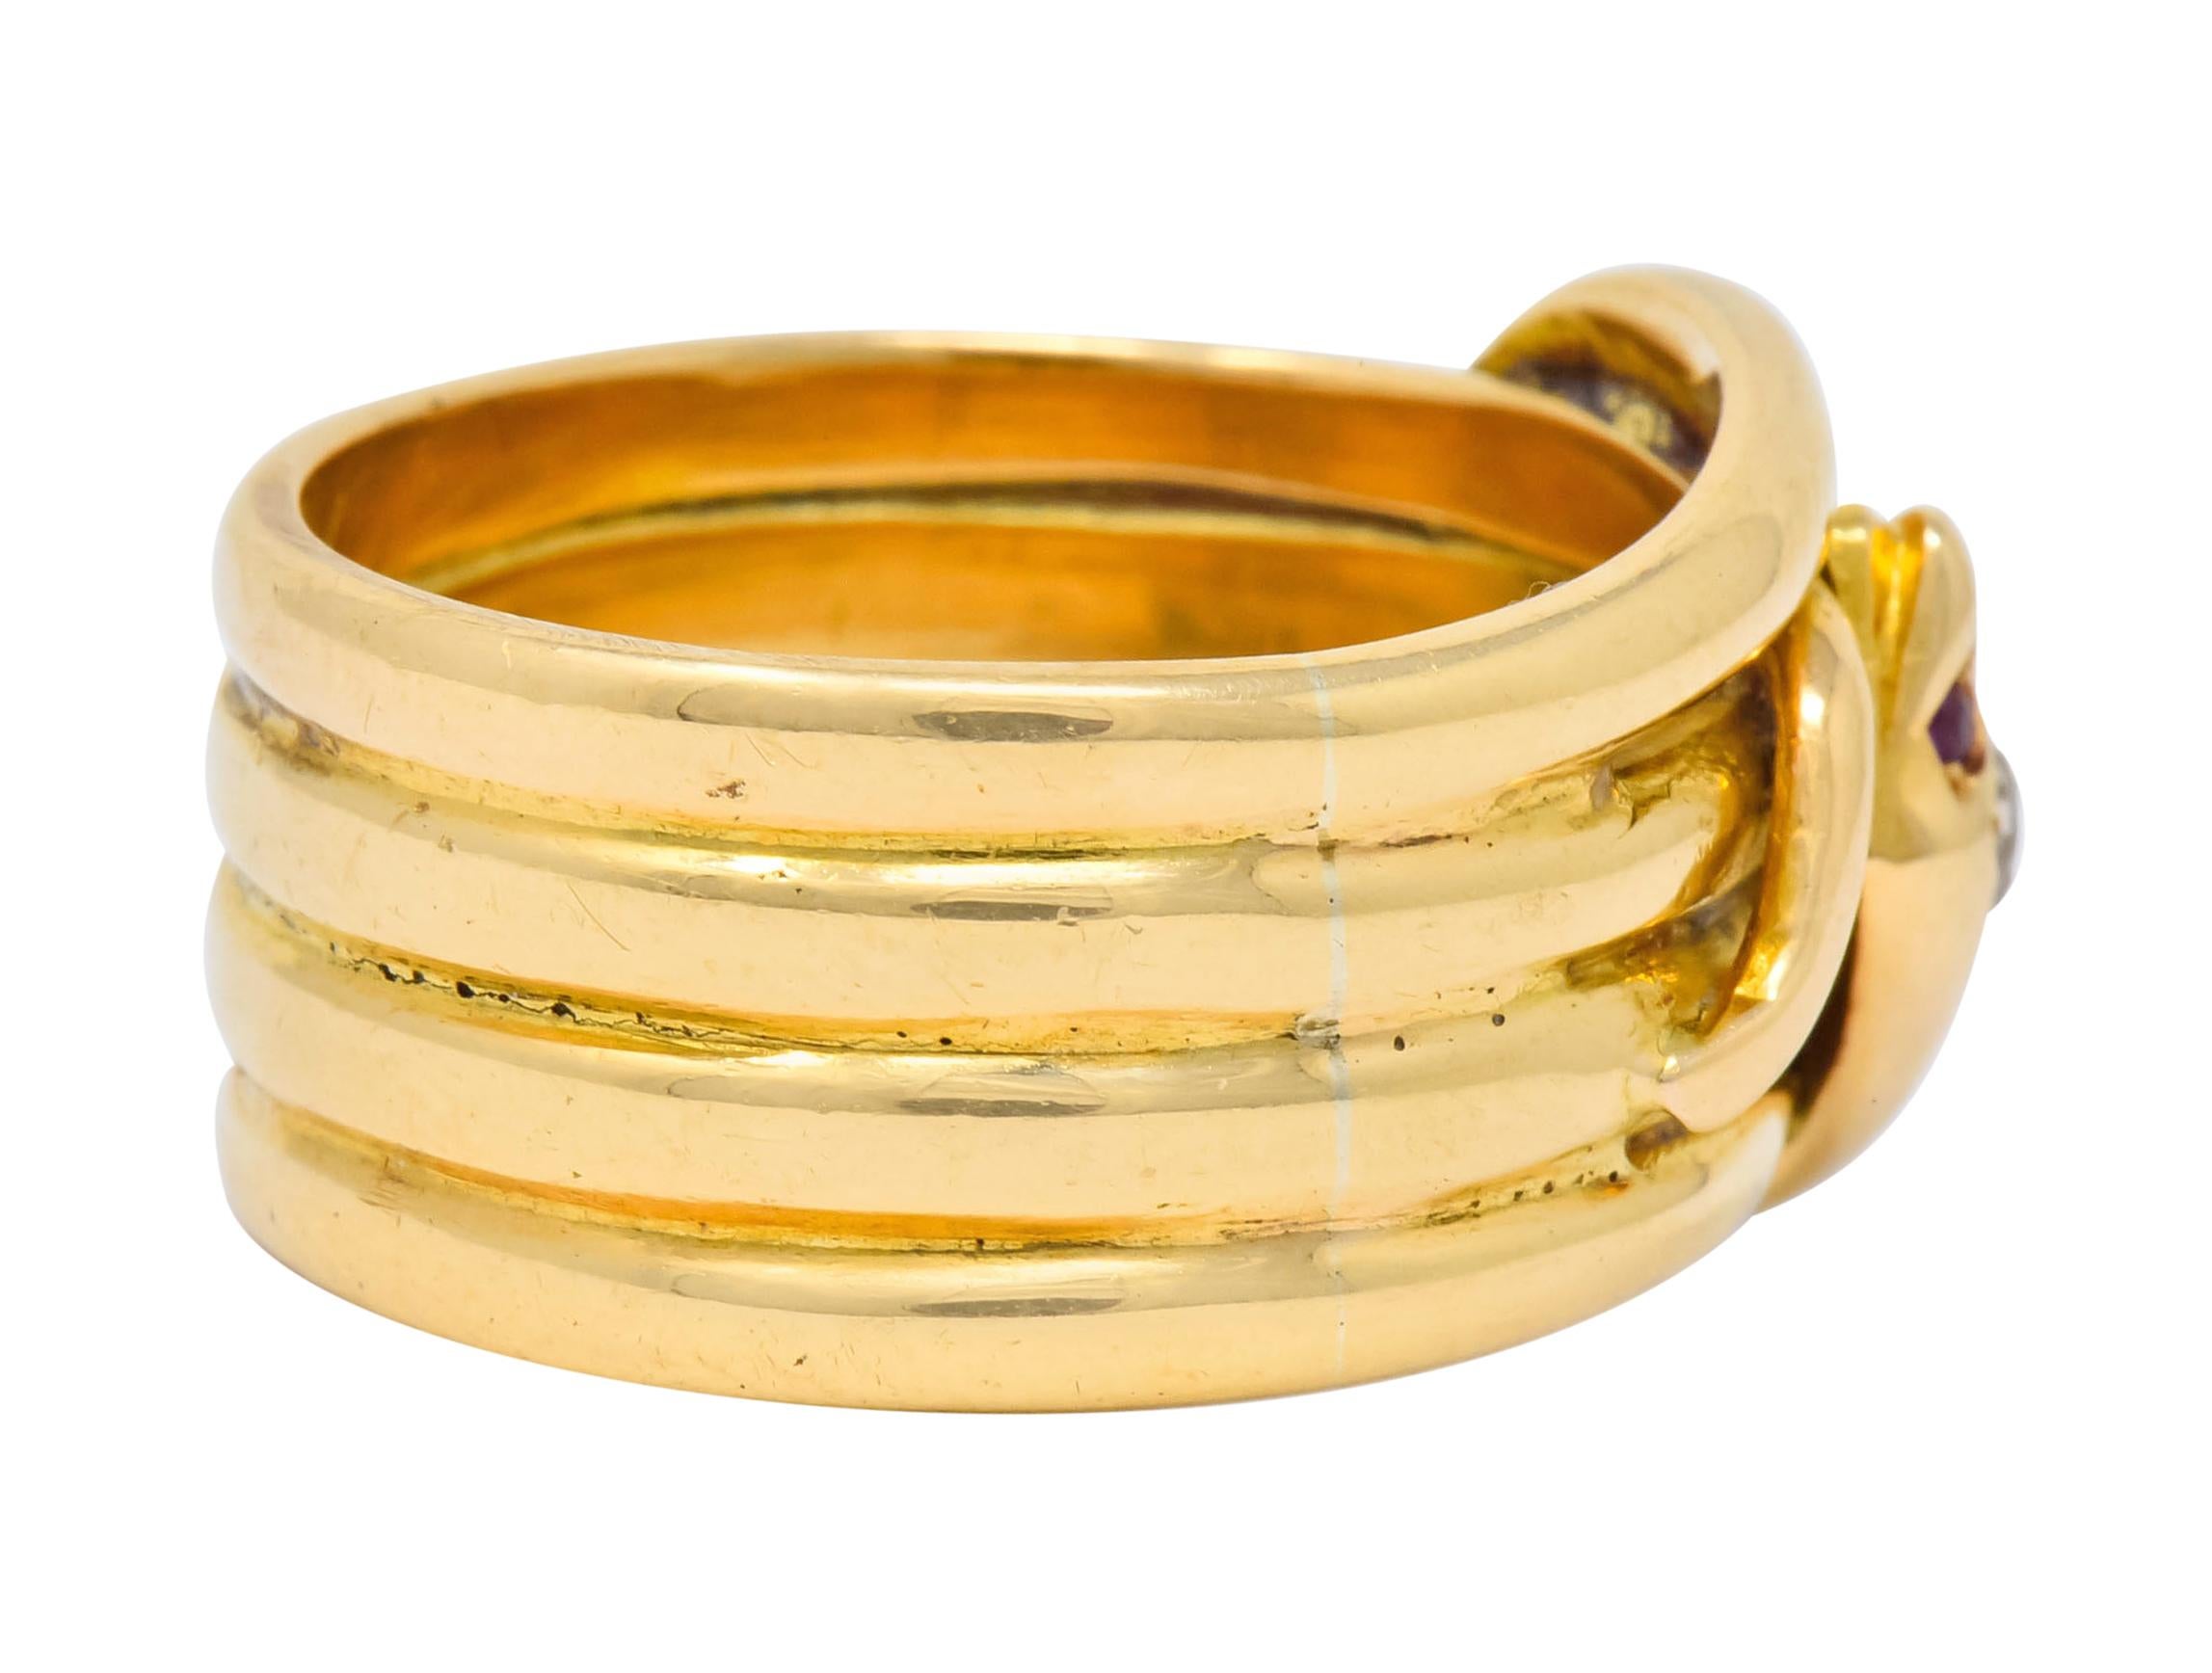 1902 18k gold ring